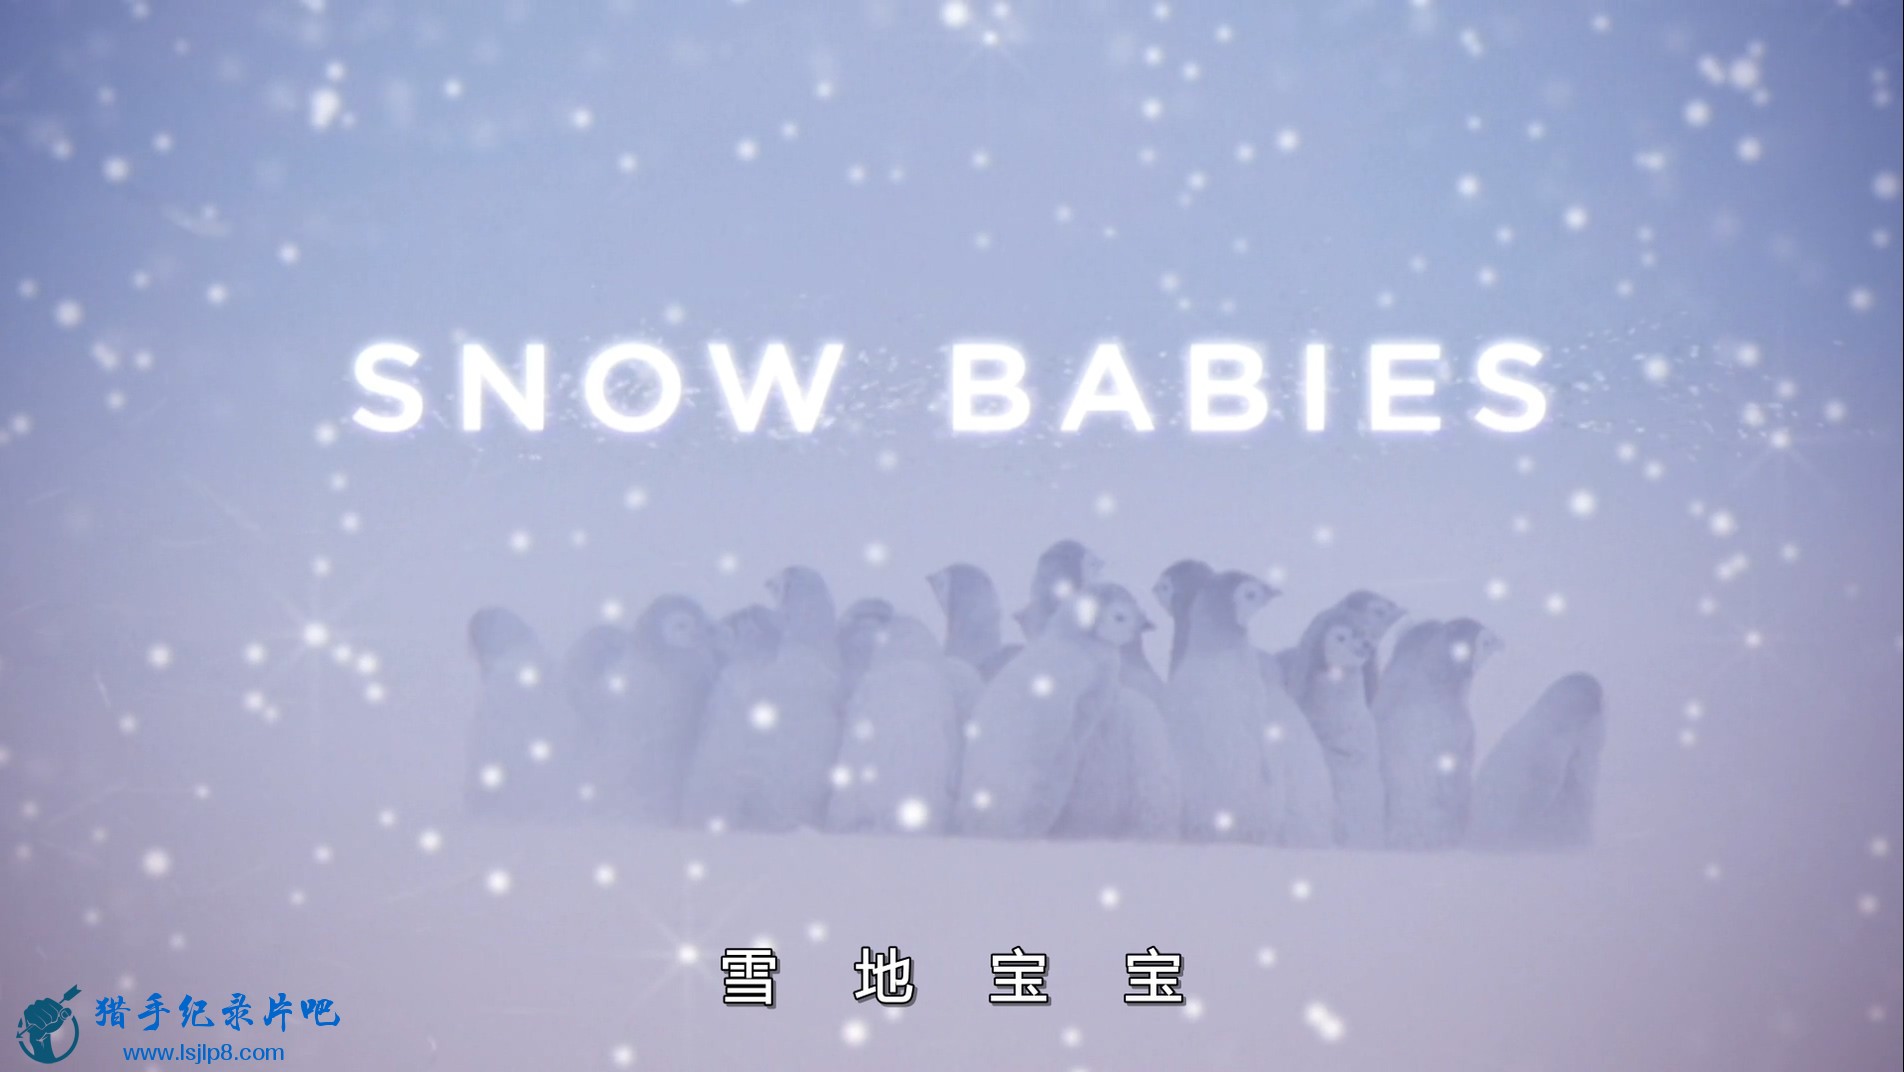 BBC.Snow.Babies.1080p.BluRay.x264.mkv_20200224_103442.567.jpg